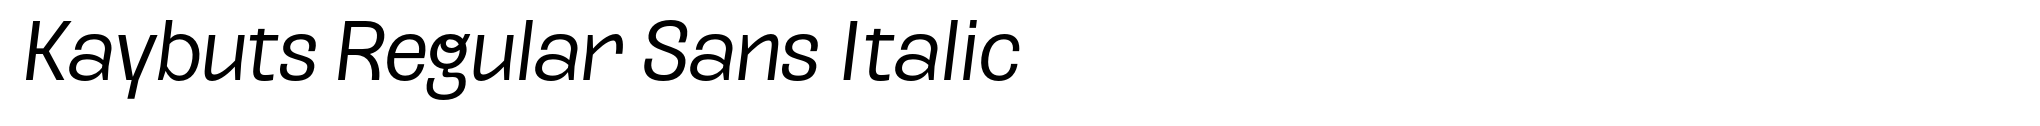 Kaybuts Regular Sans Italic image